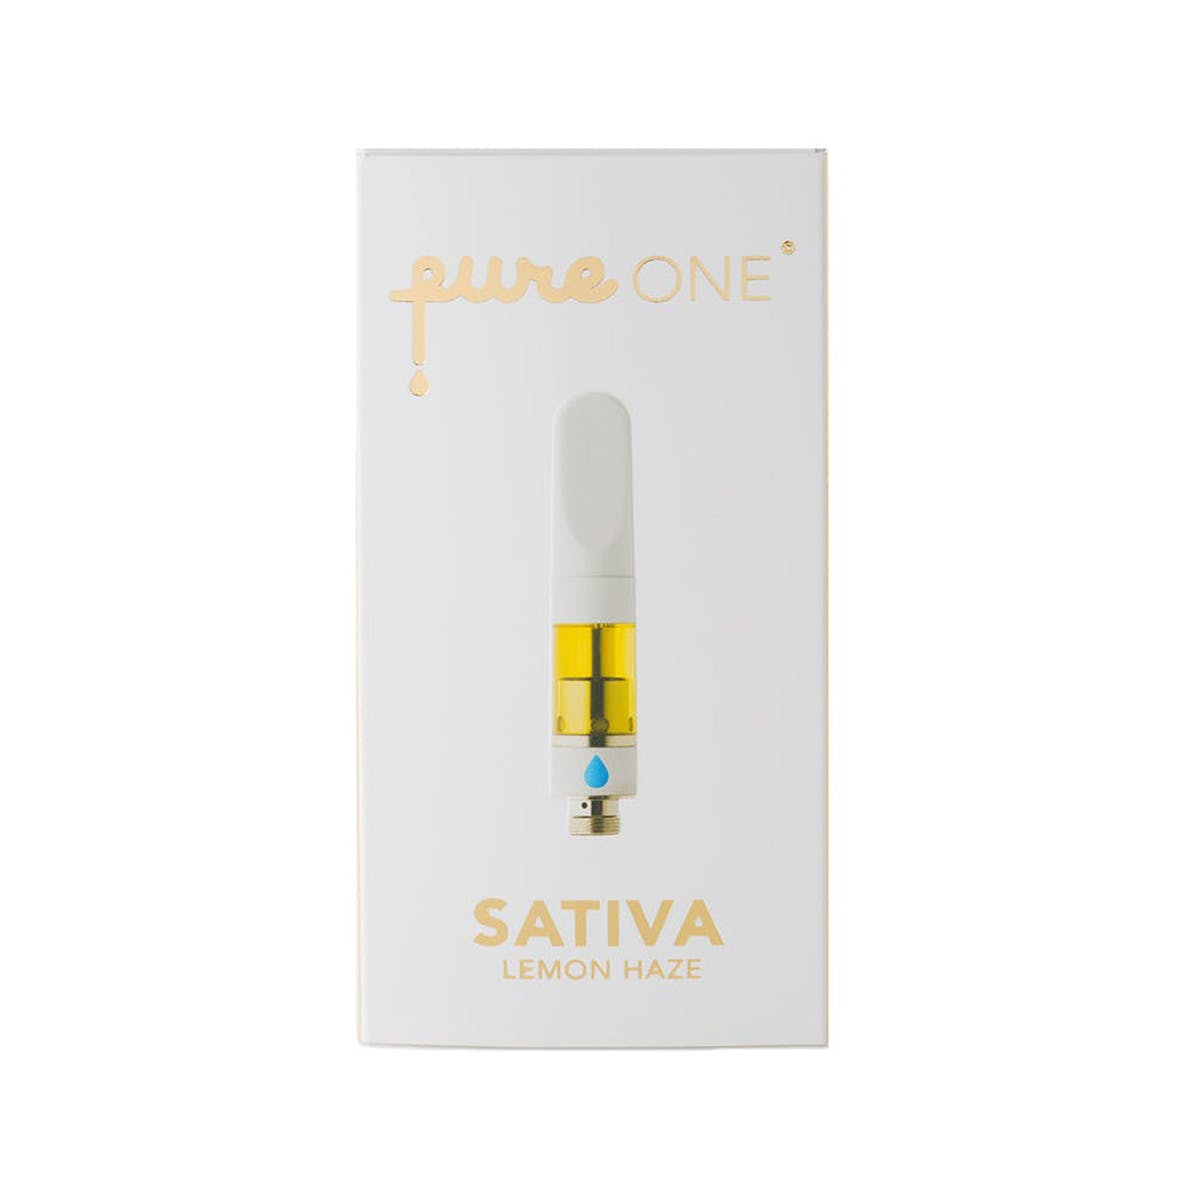 Sativa PureONE CO2 Cartridge - Lemon Haze